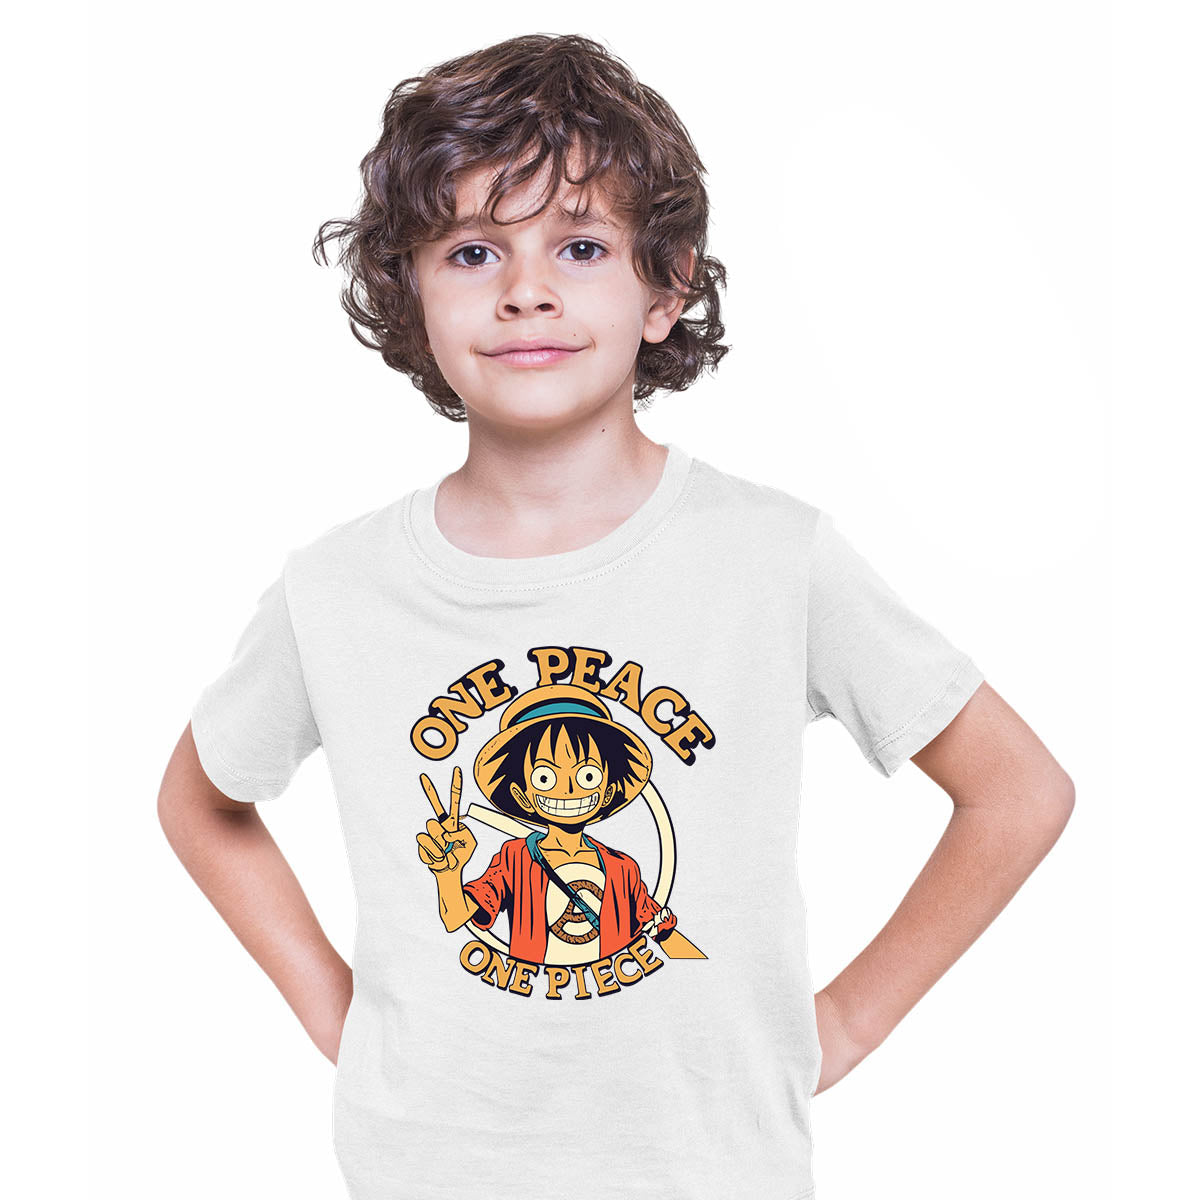 One Peace Monkey D. Luffy One Piece Anime Manga White T-shirt for Kids